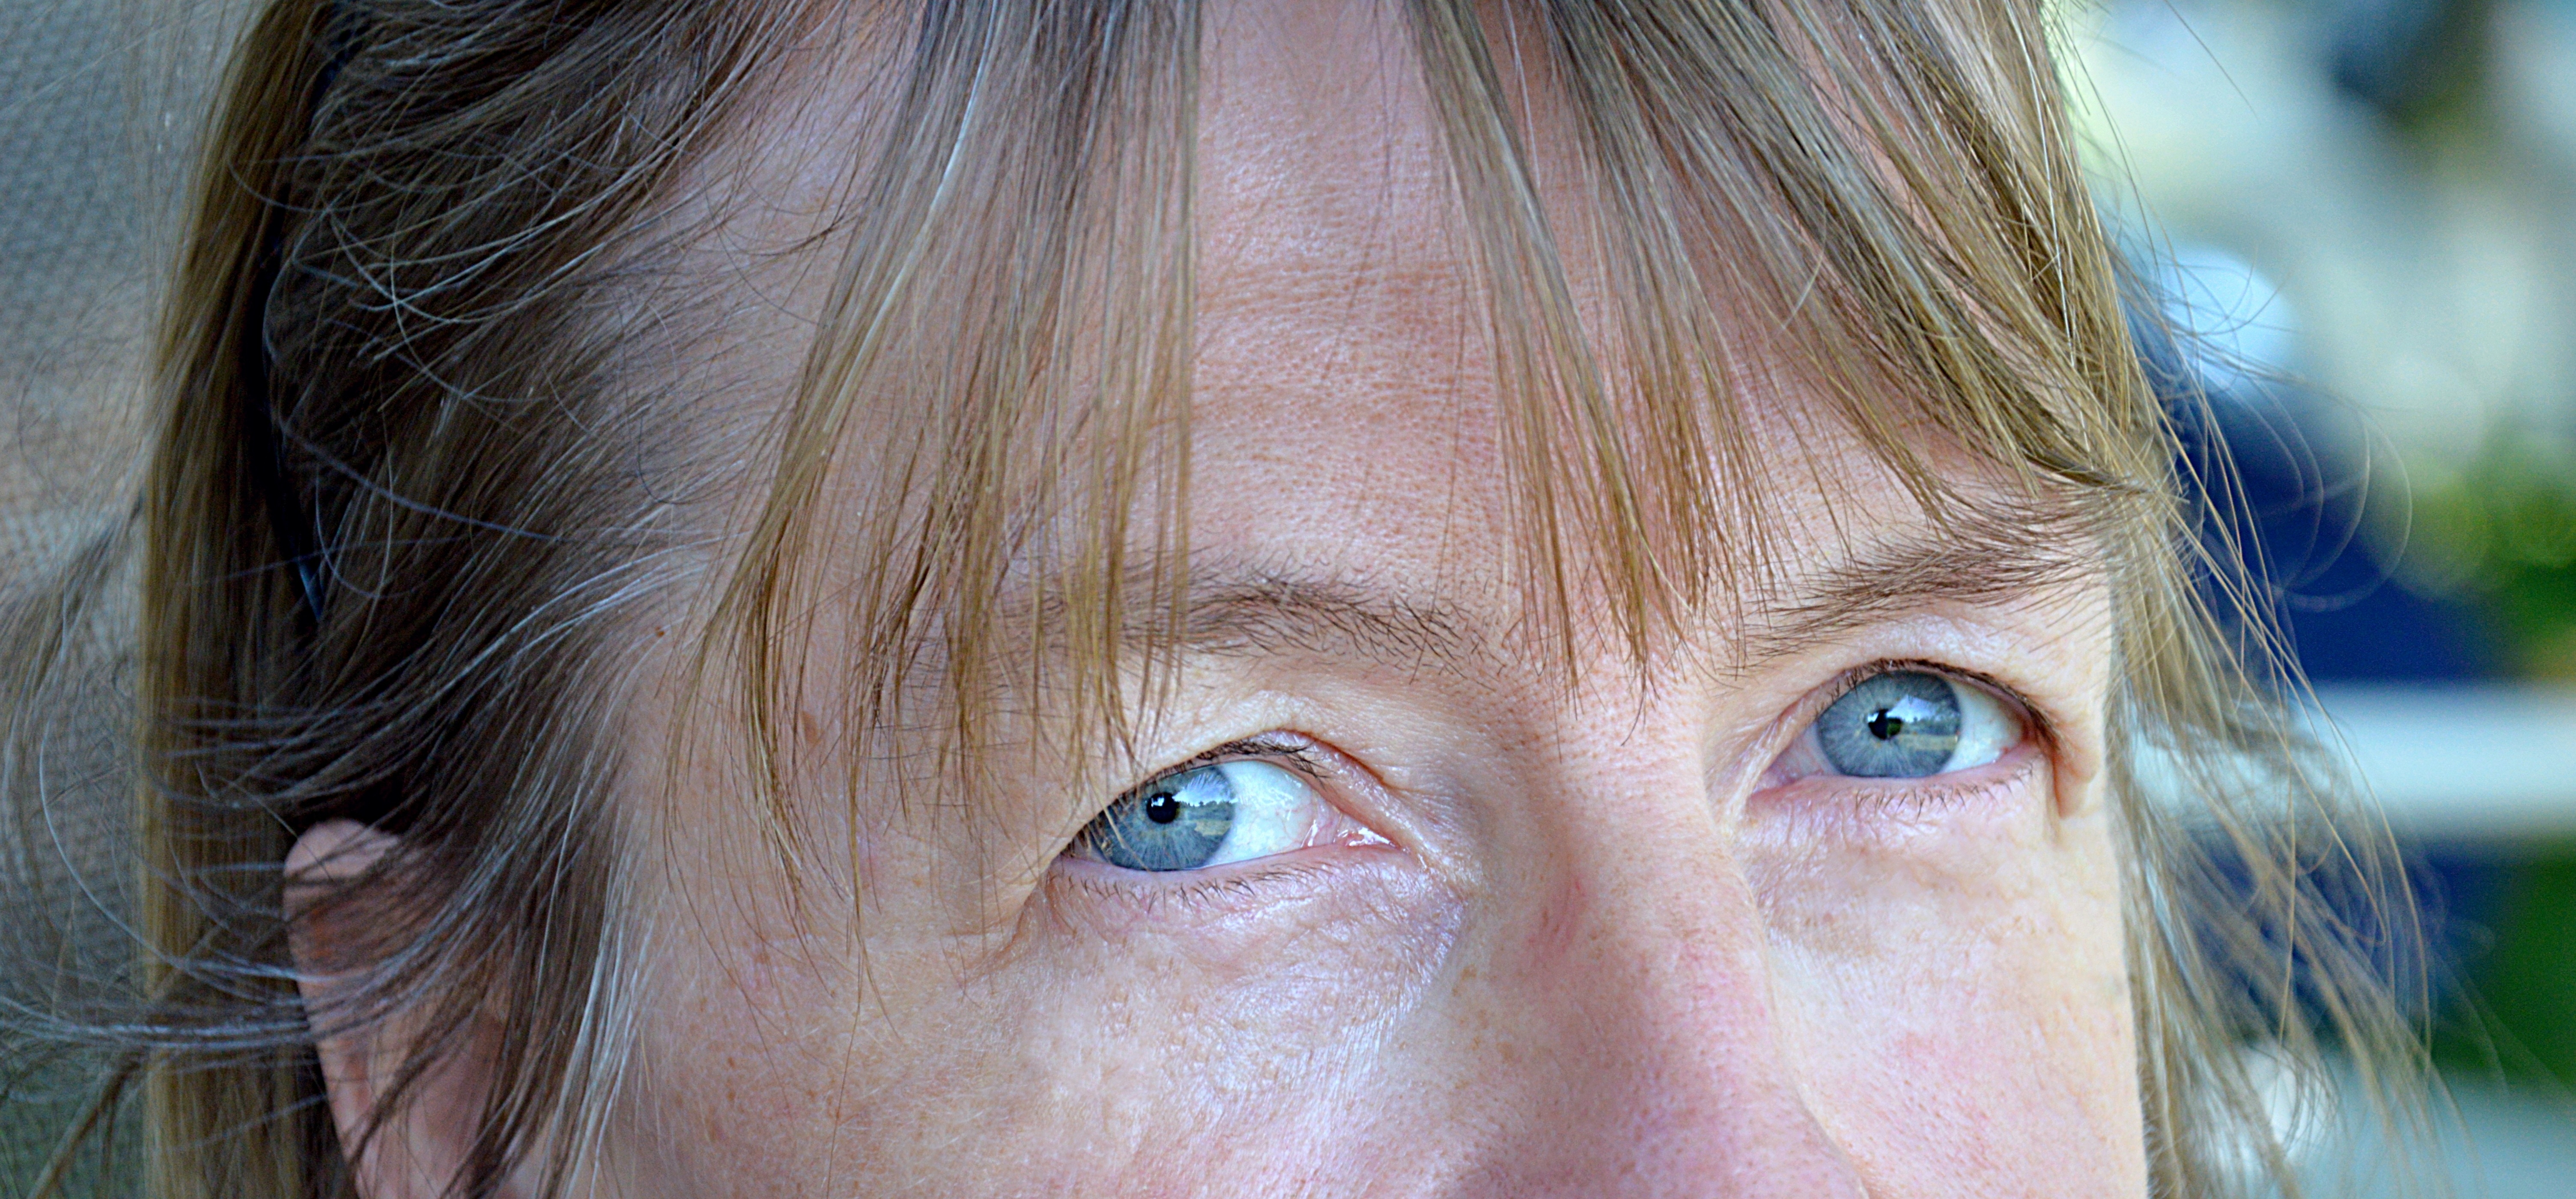 women's blue eyes and blonde hair